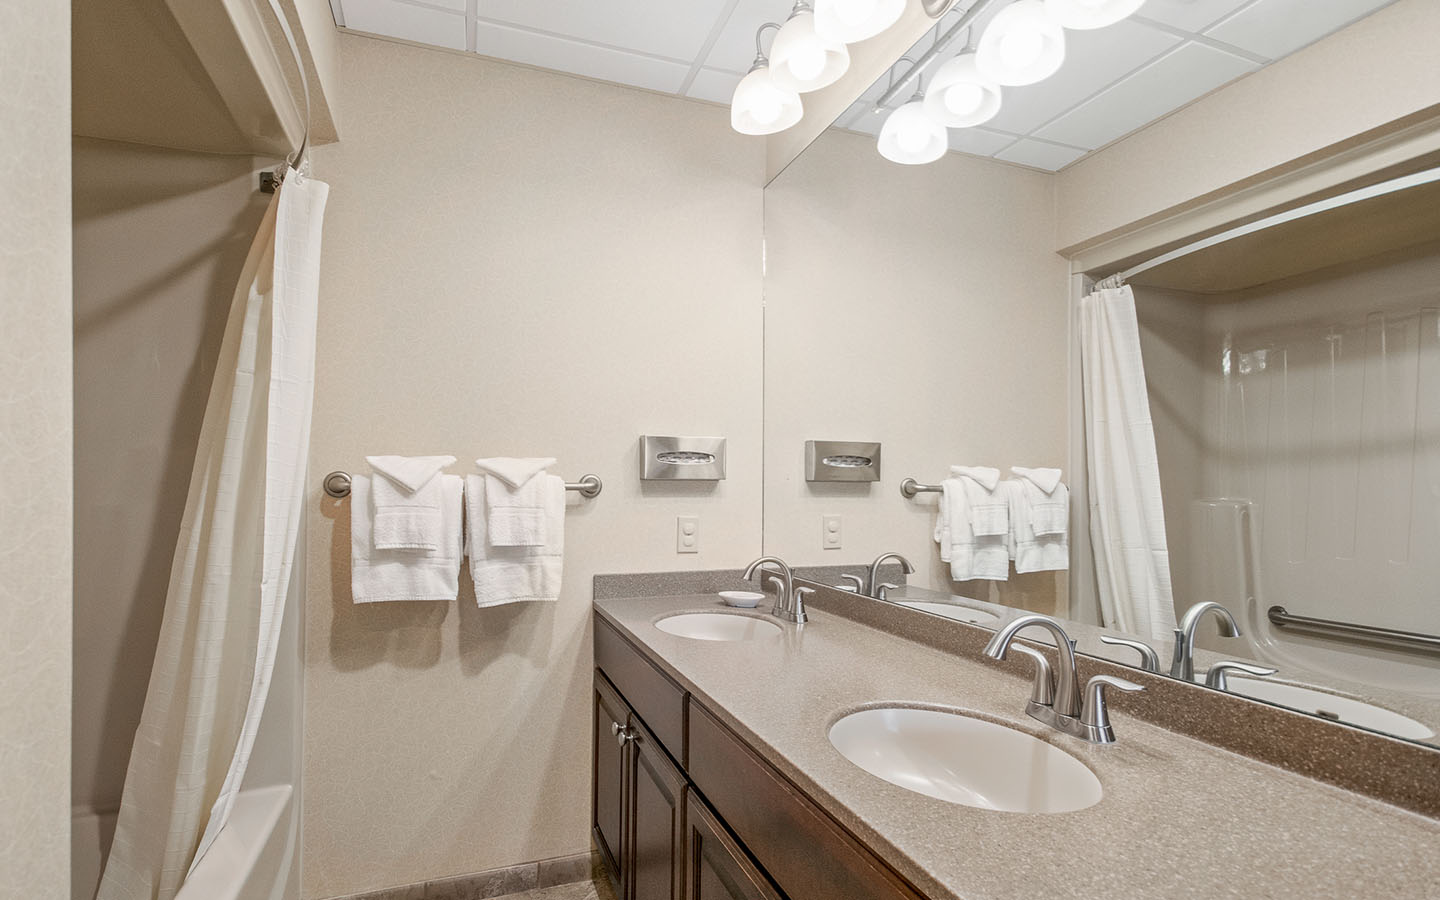 Woodloch suite bathroom with twin vanity sinks.